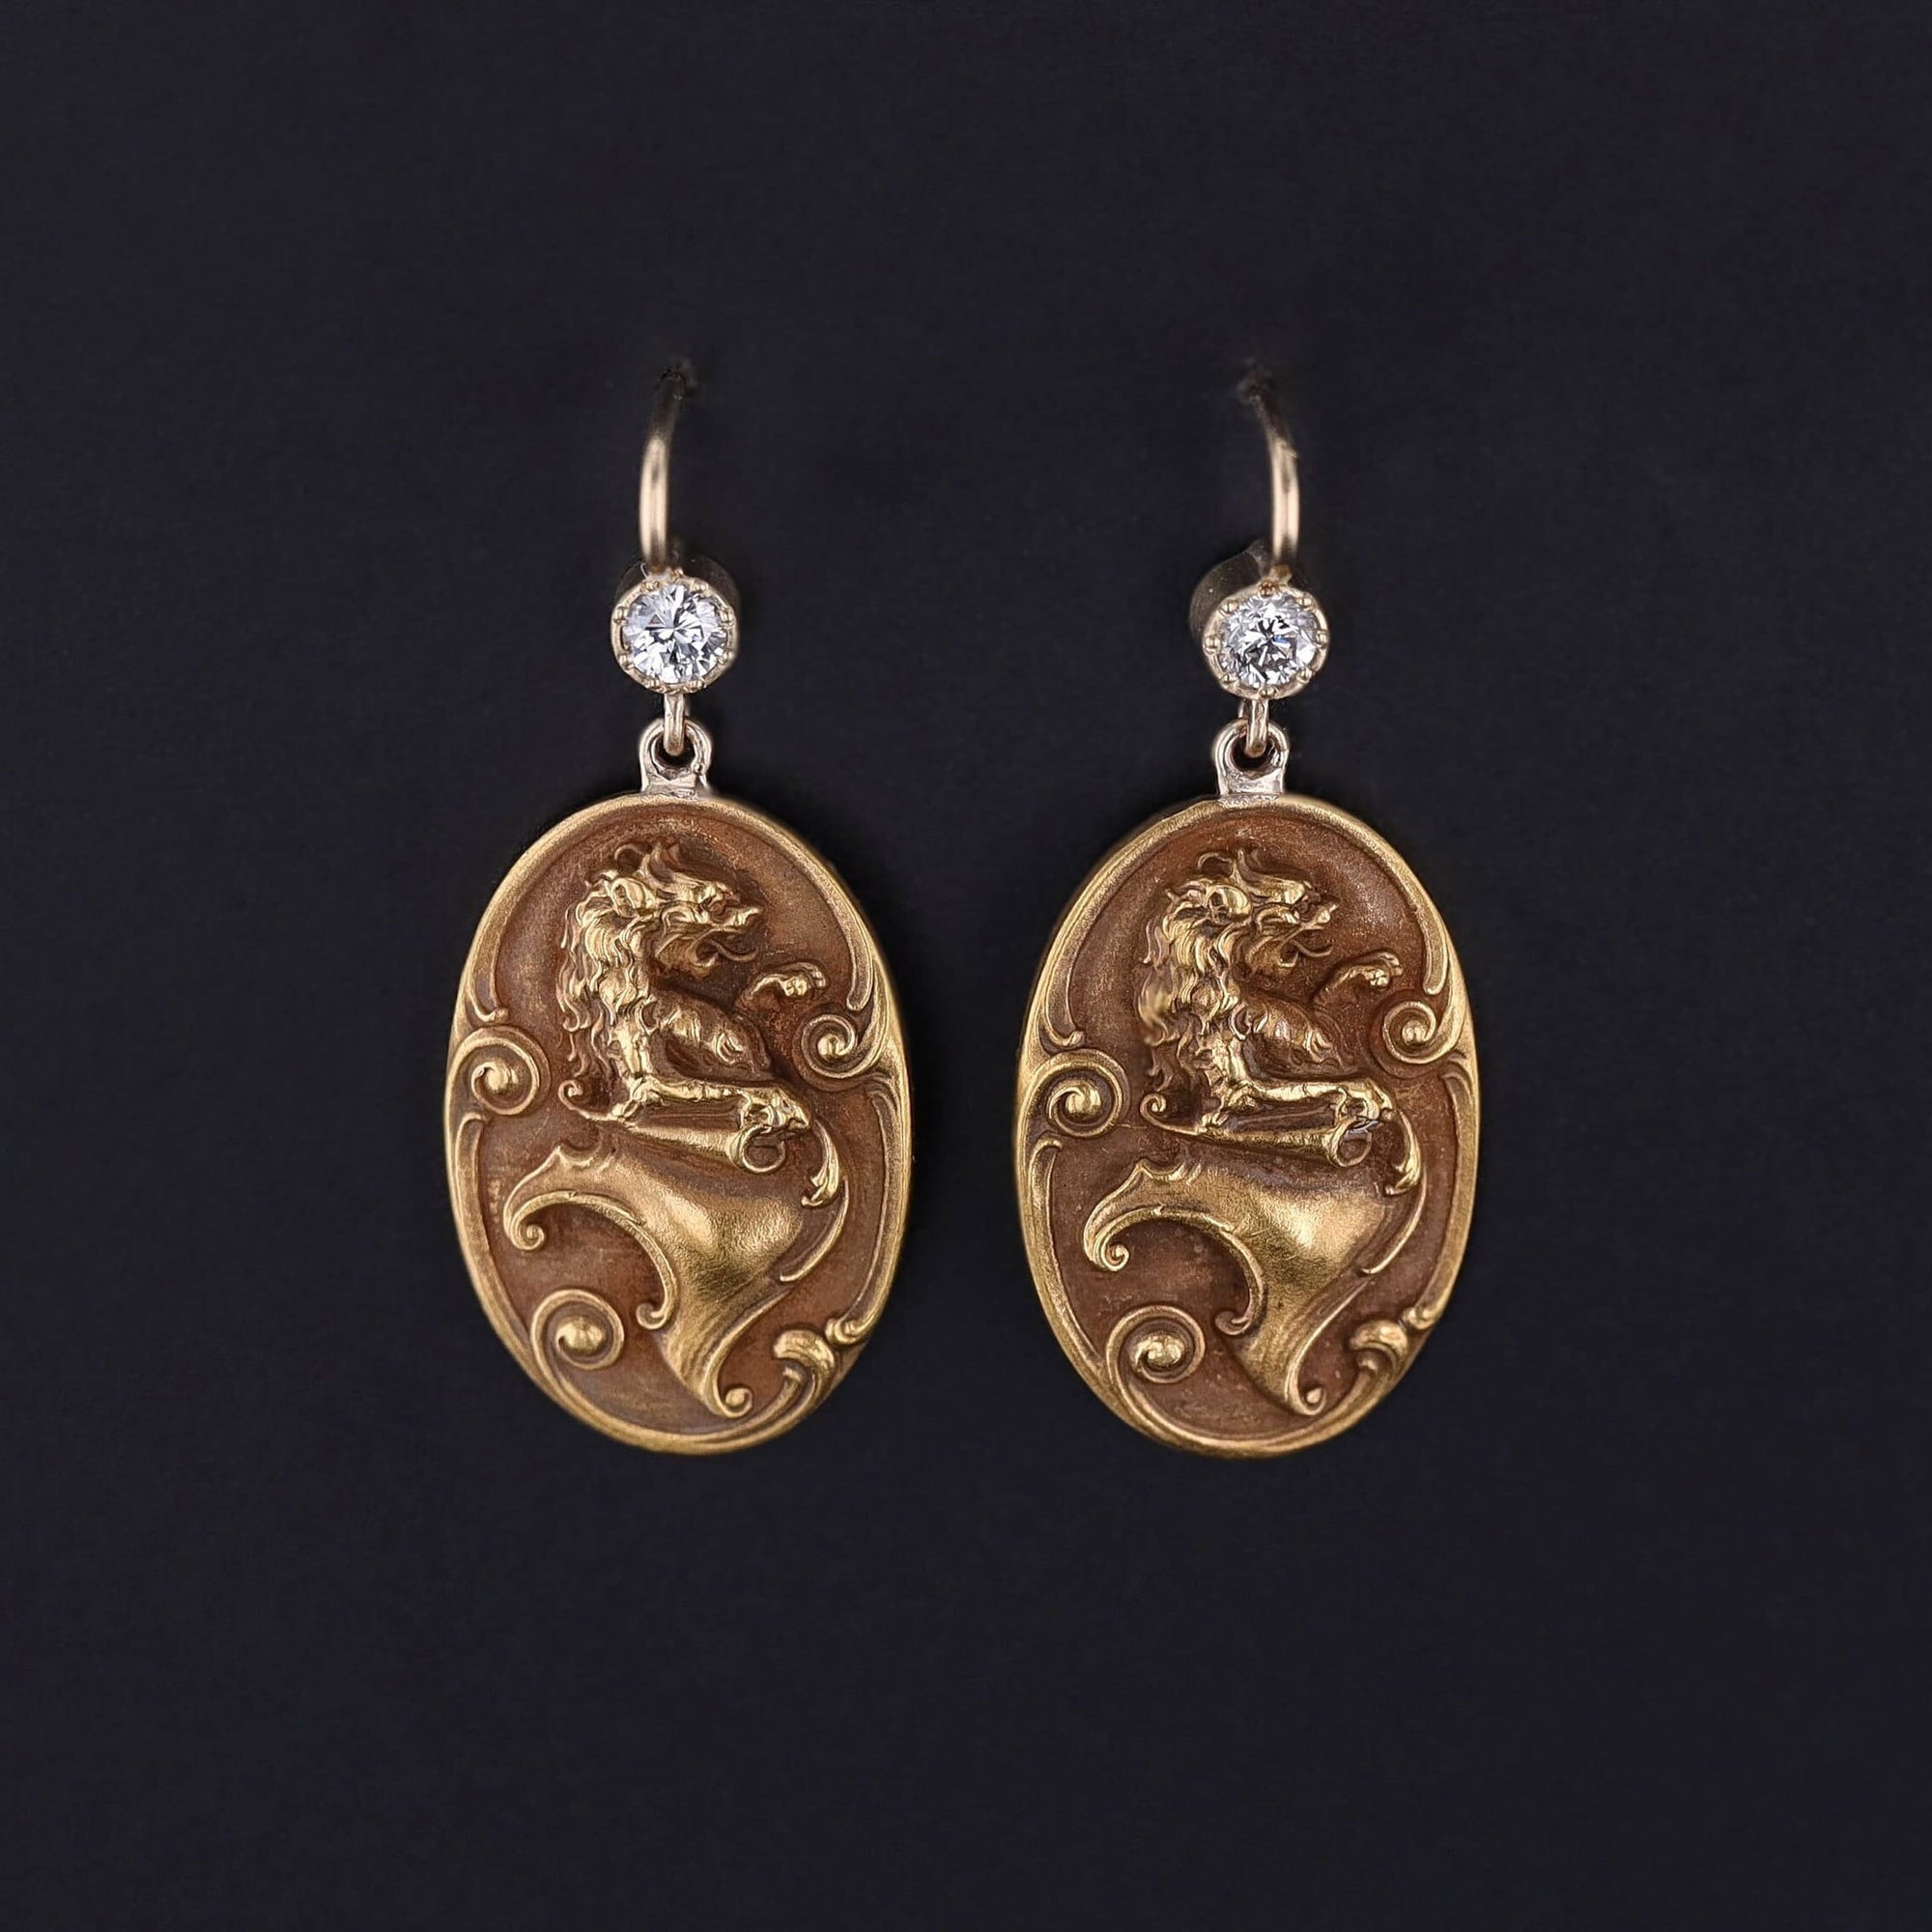 Antique Lion Earrings of 14k Gold